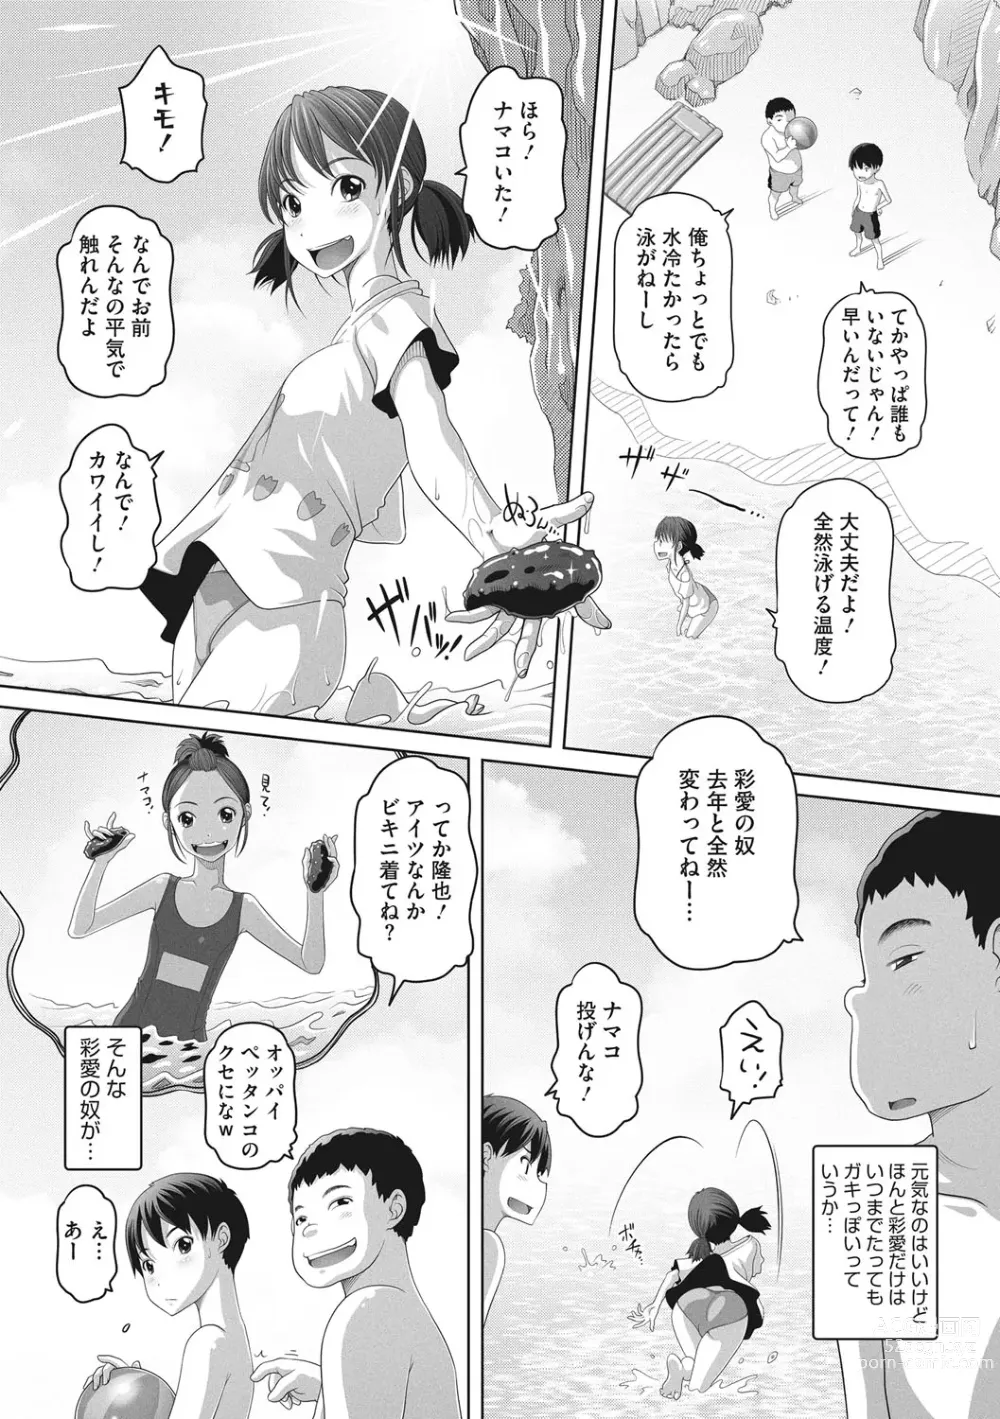 Page 5 of manga Namaiki-mori no 3 S